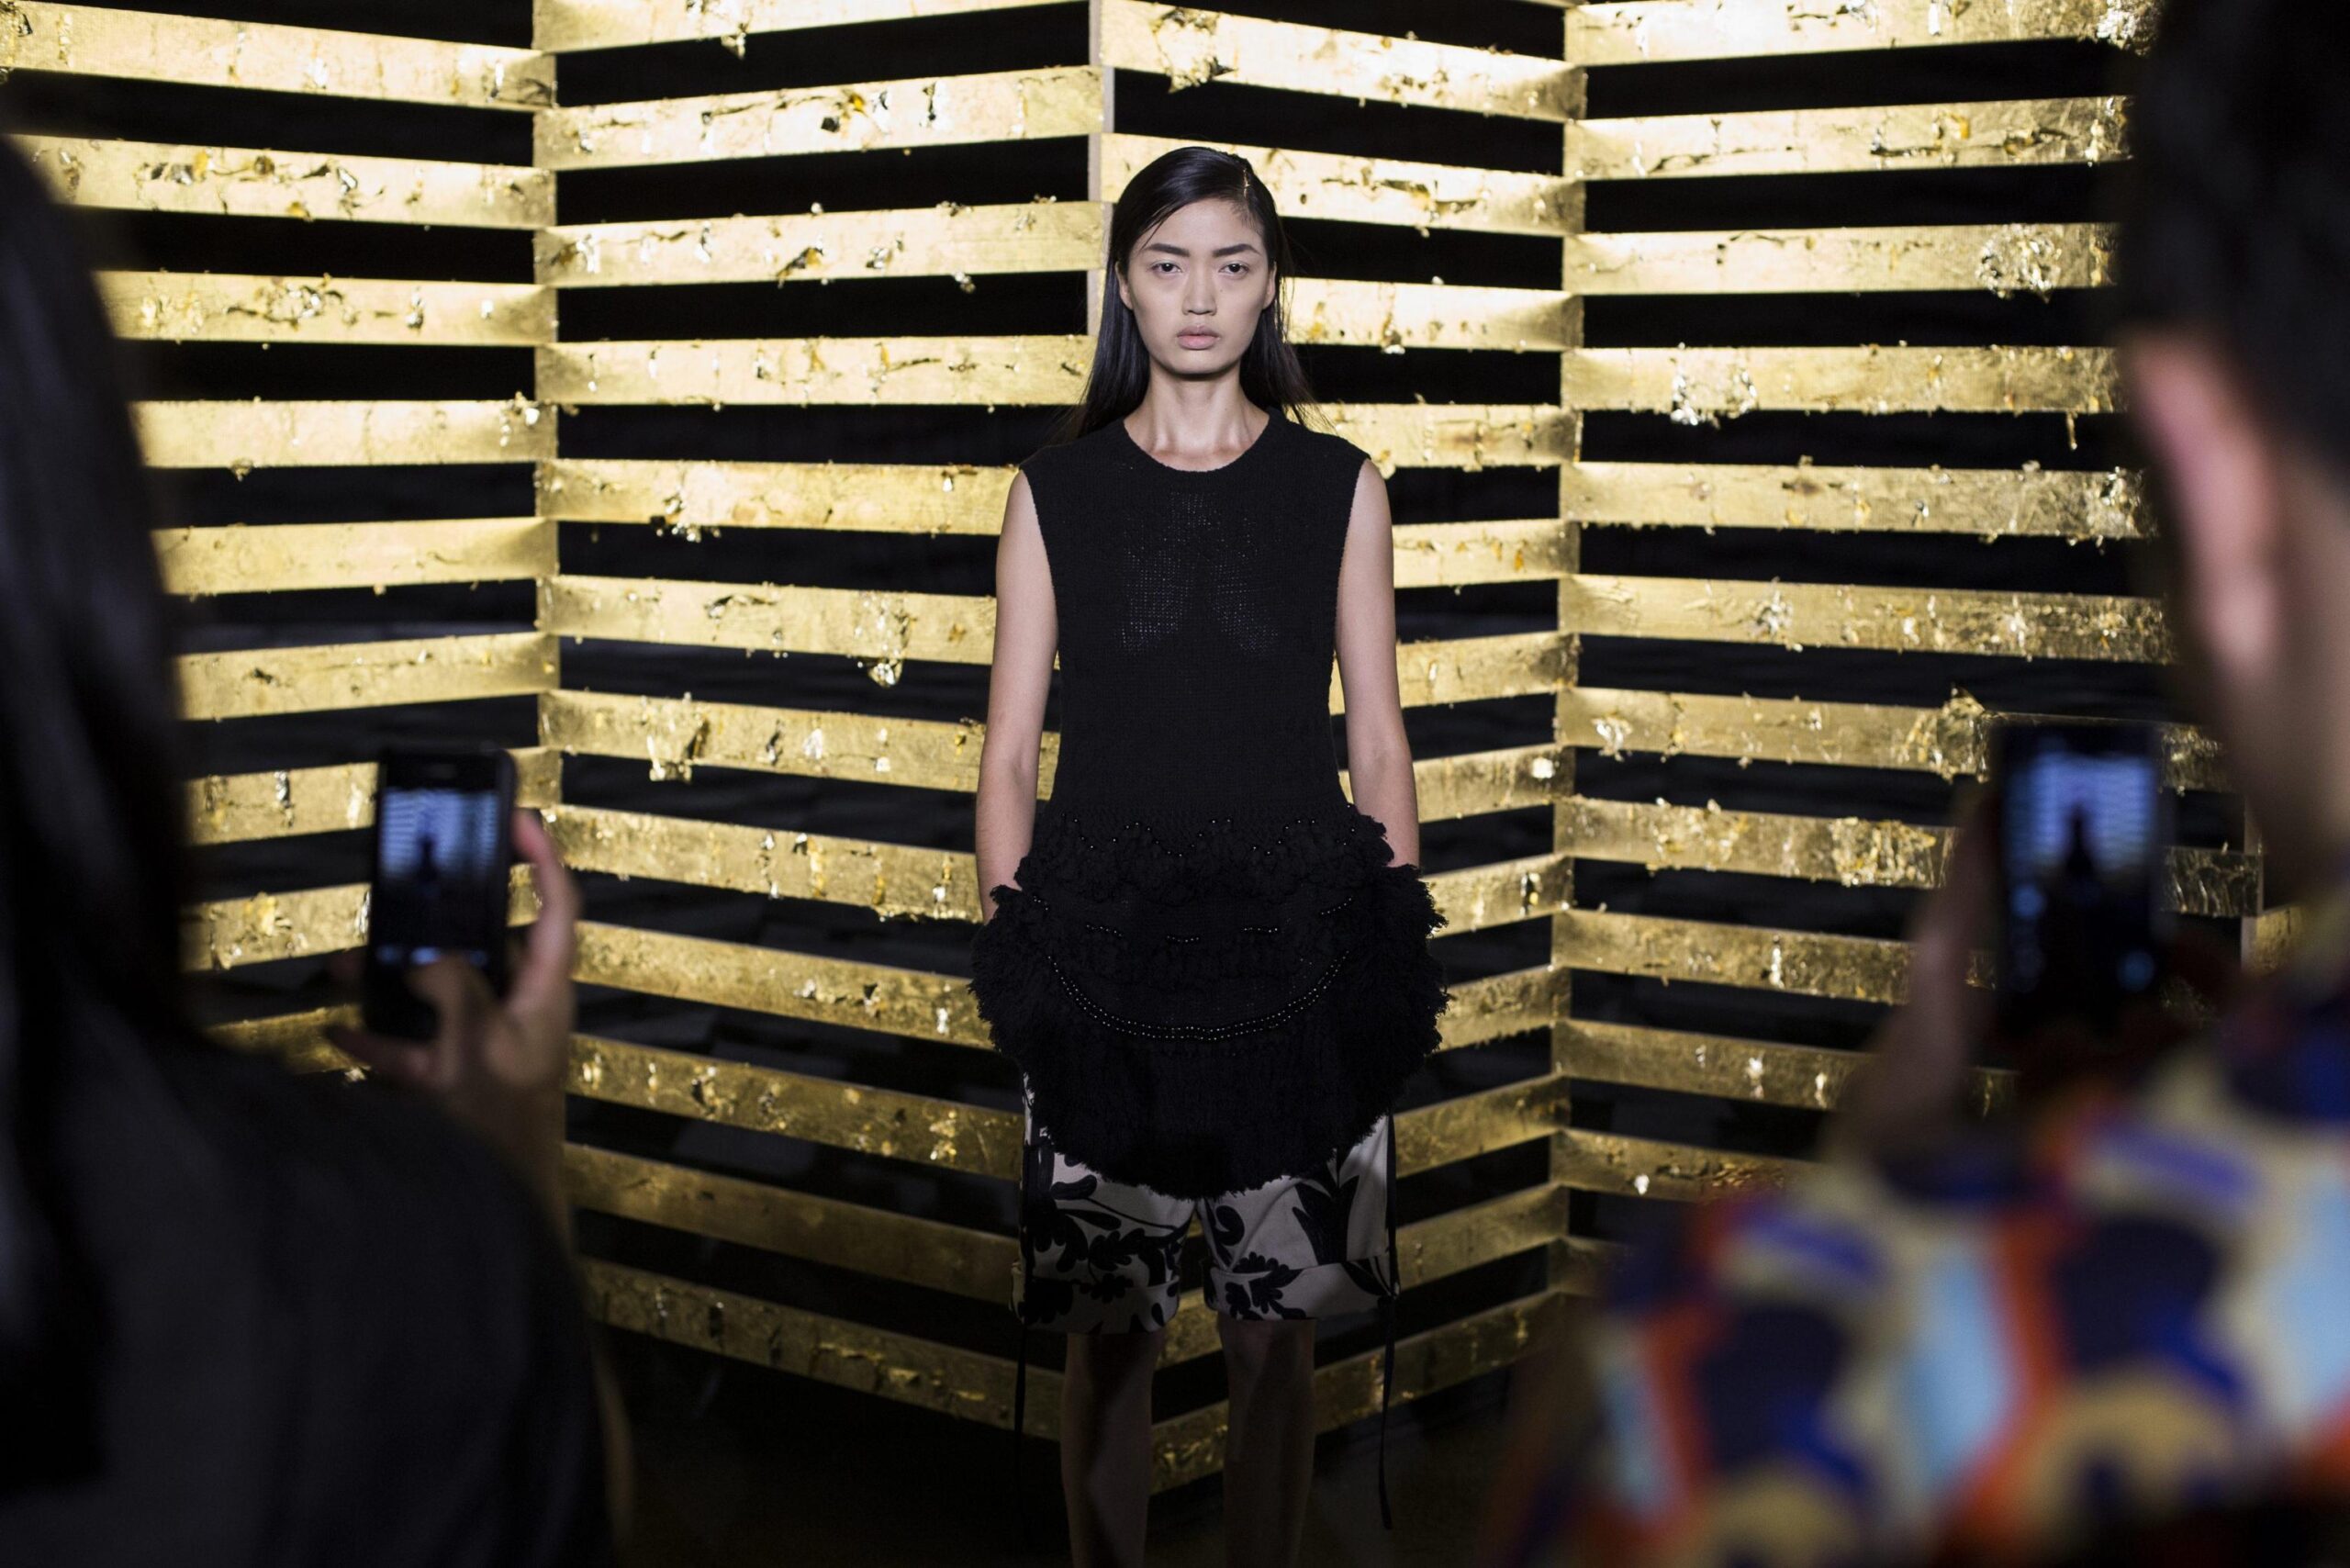 Fotoracconto sulla vita di Qiwen Feng, la modella della Paris Fashion Week09